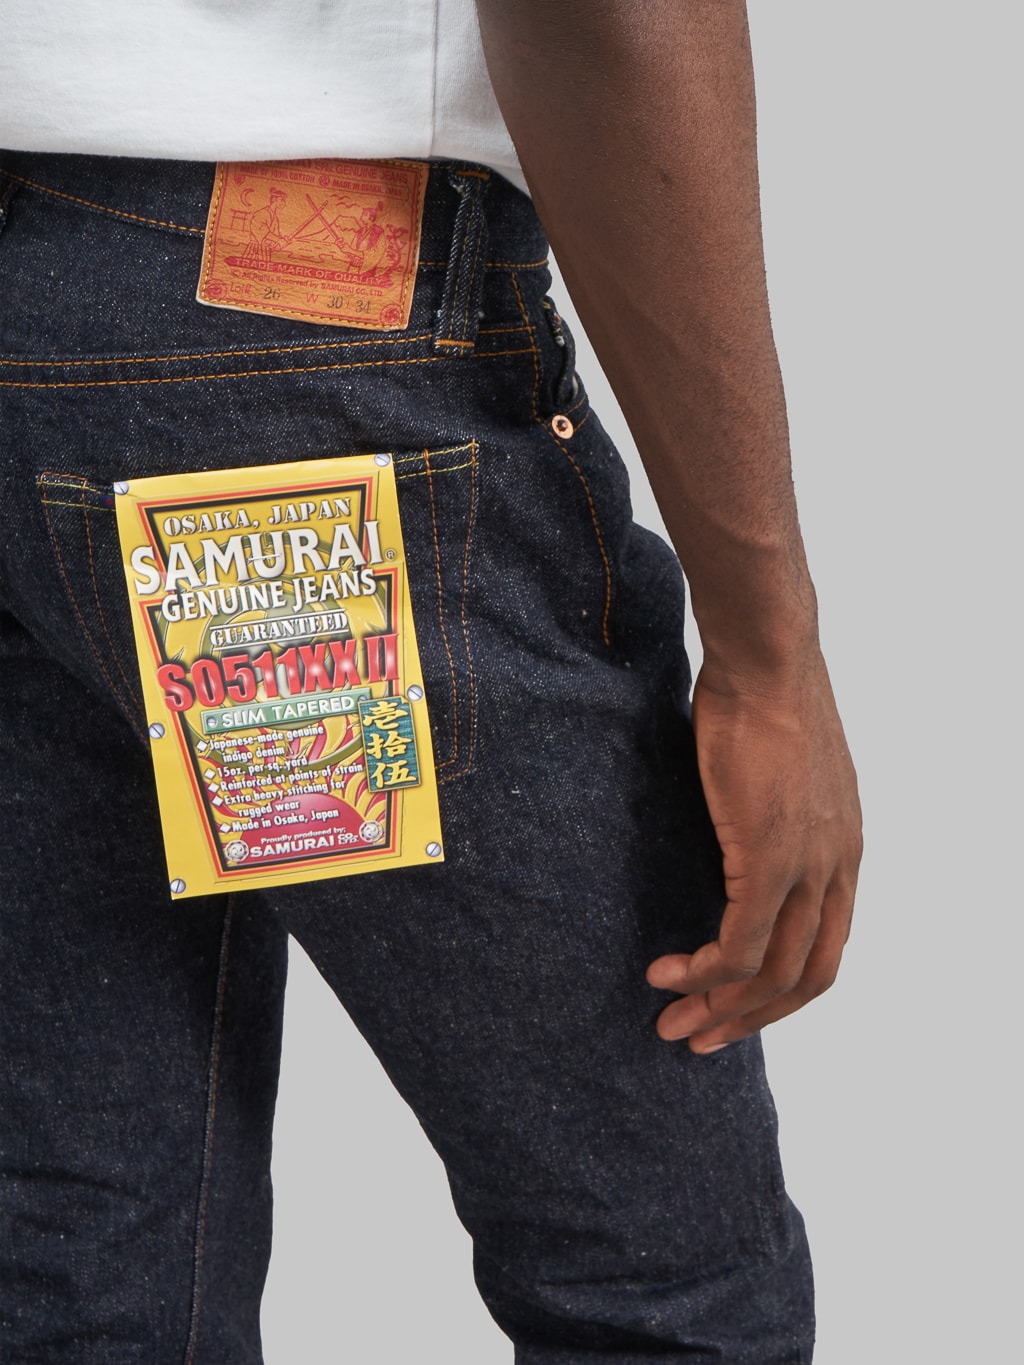 samurai s0511xxii texas cotton slim tapered jeans back details